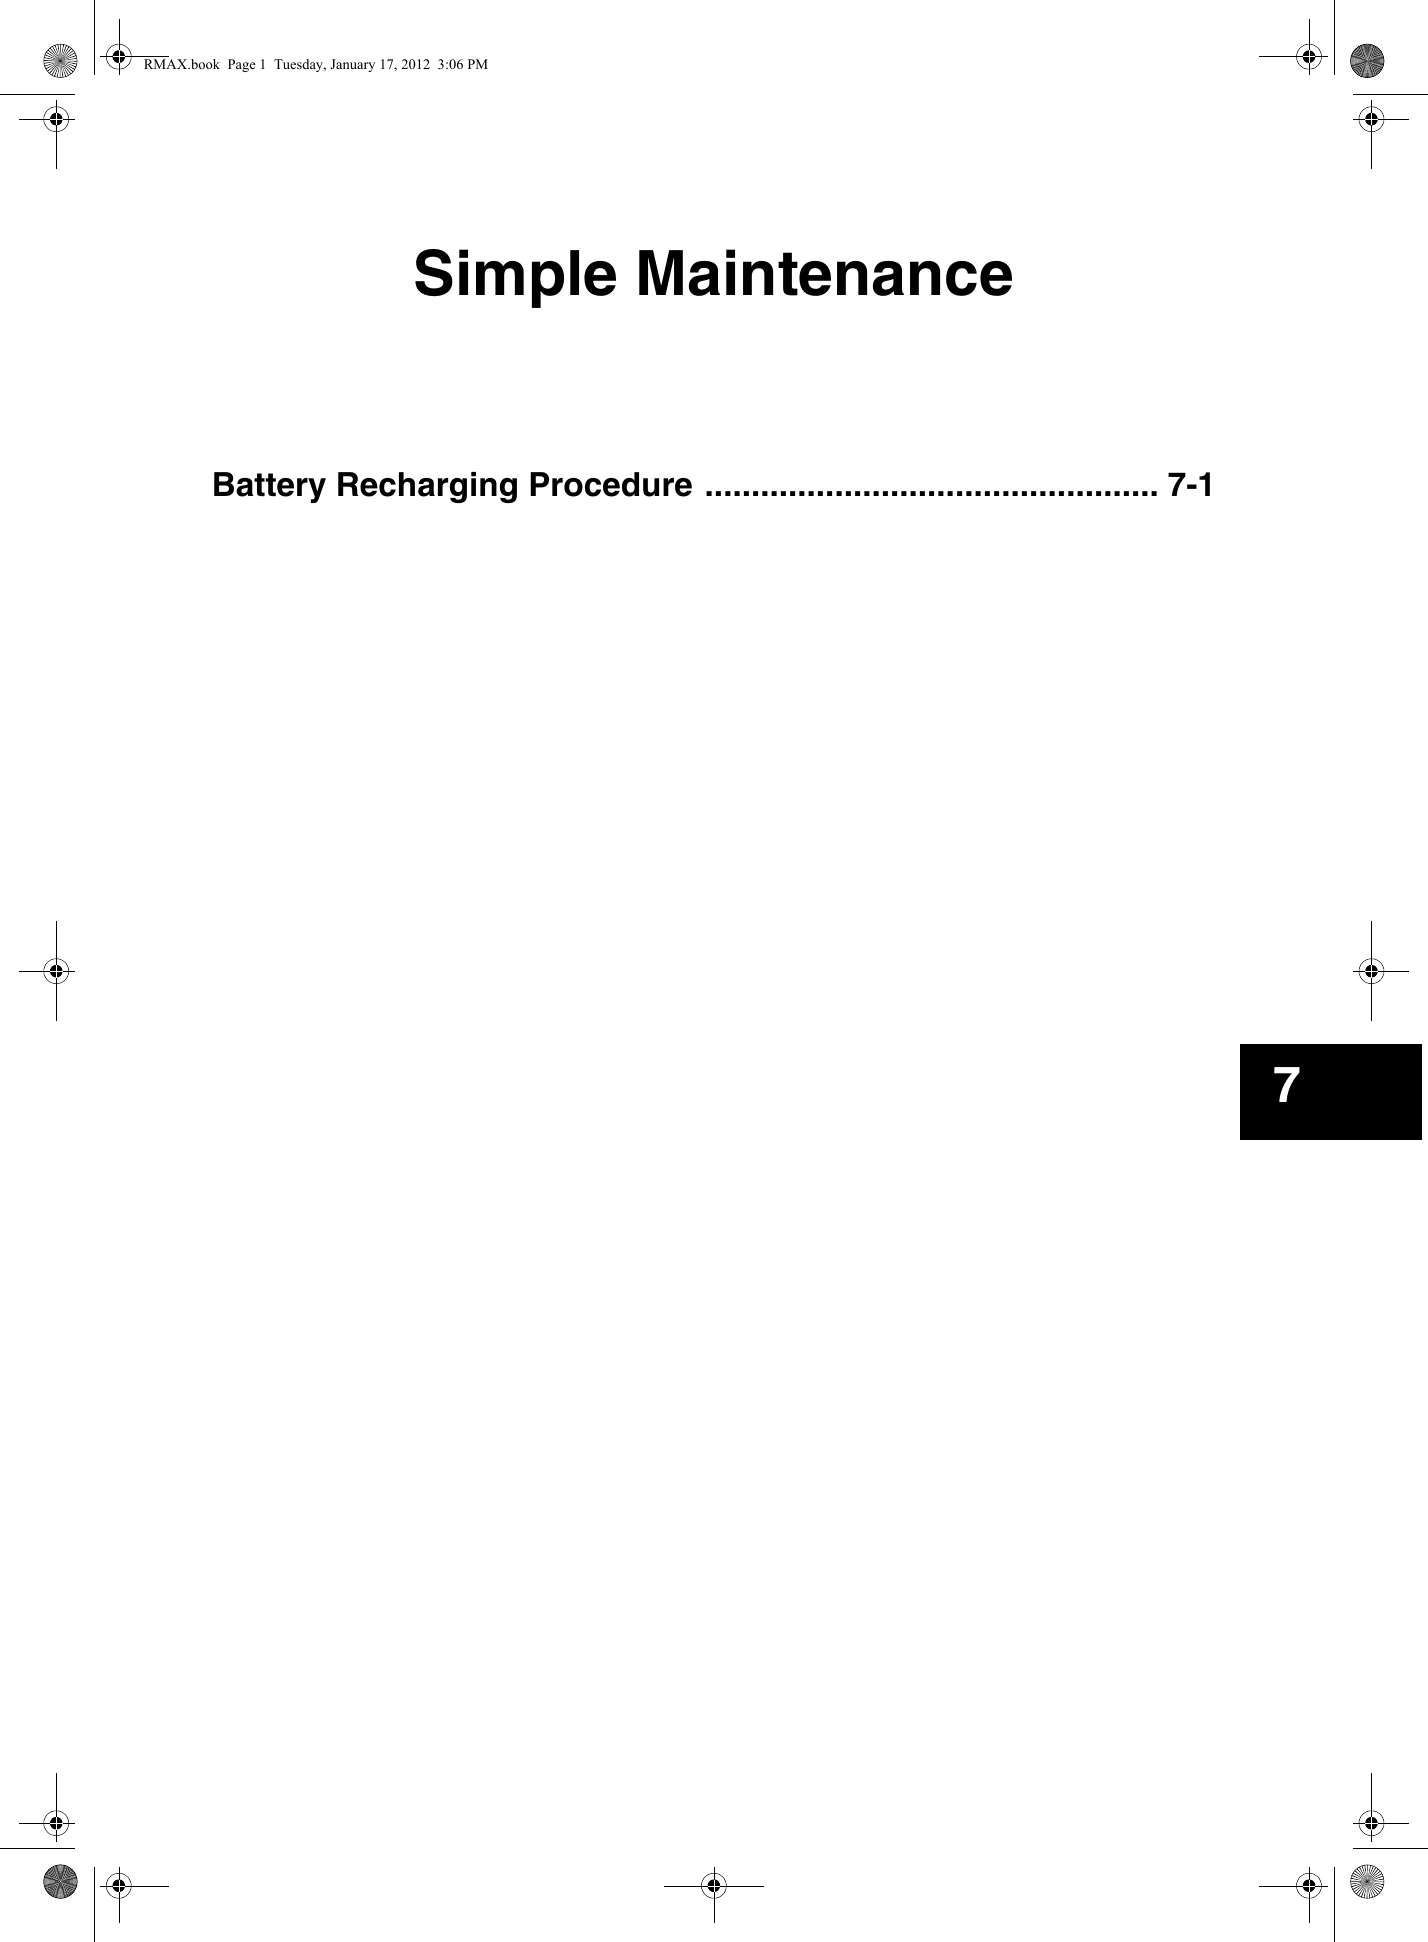 Simple MaintenanceBattery Recharging Procedure ................................................. 7-17RMAX.book  Page 1  Tuesday, January 17, 2012  3:06 PM